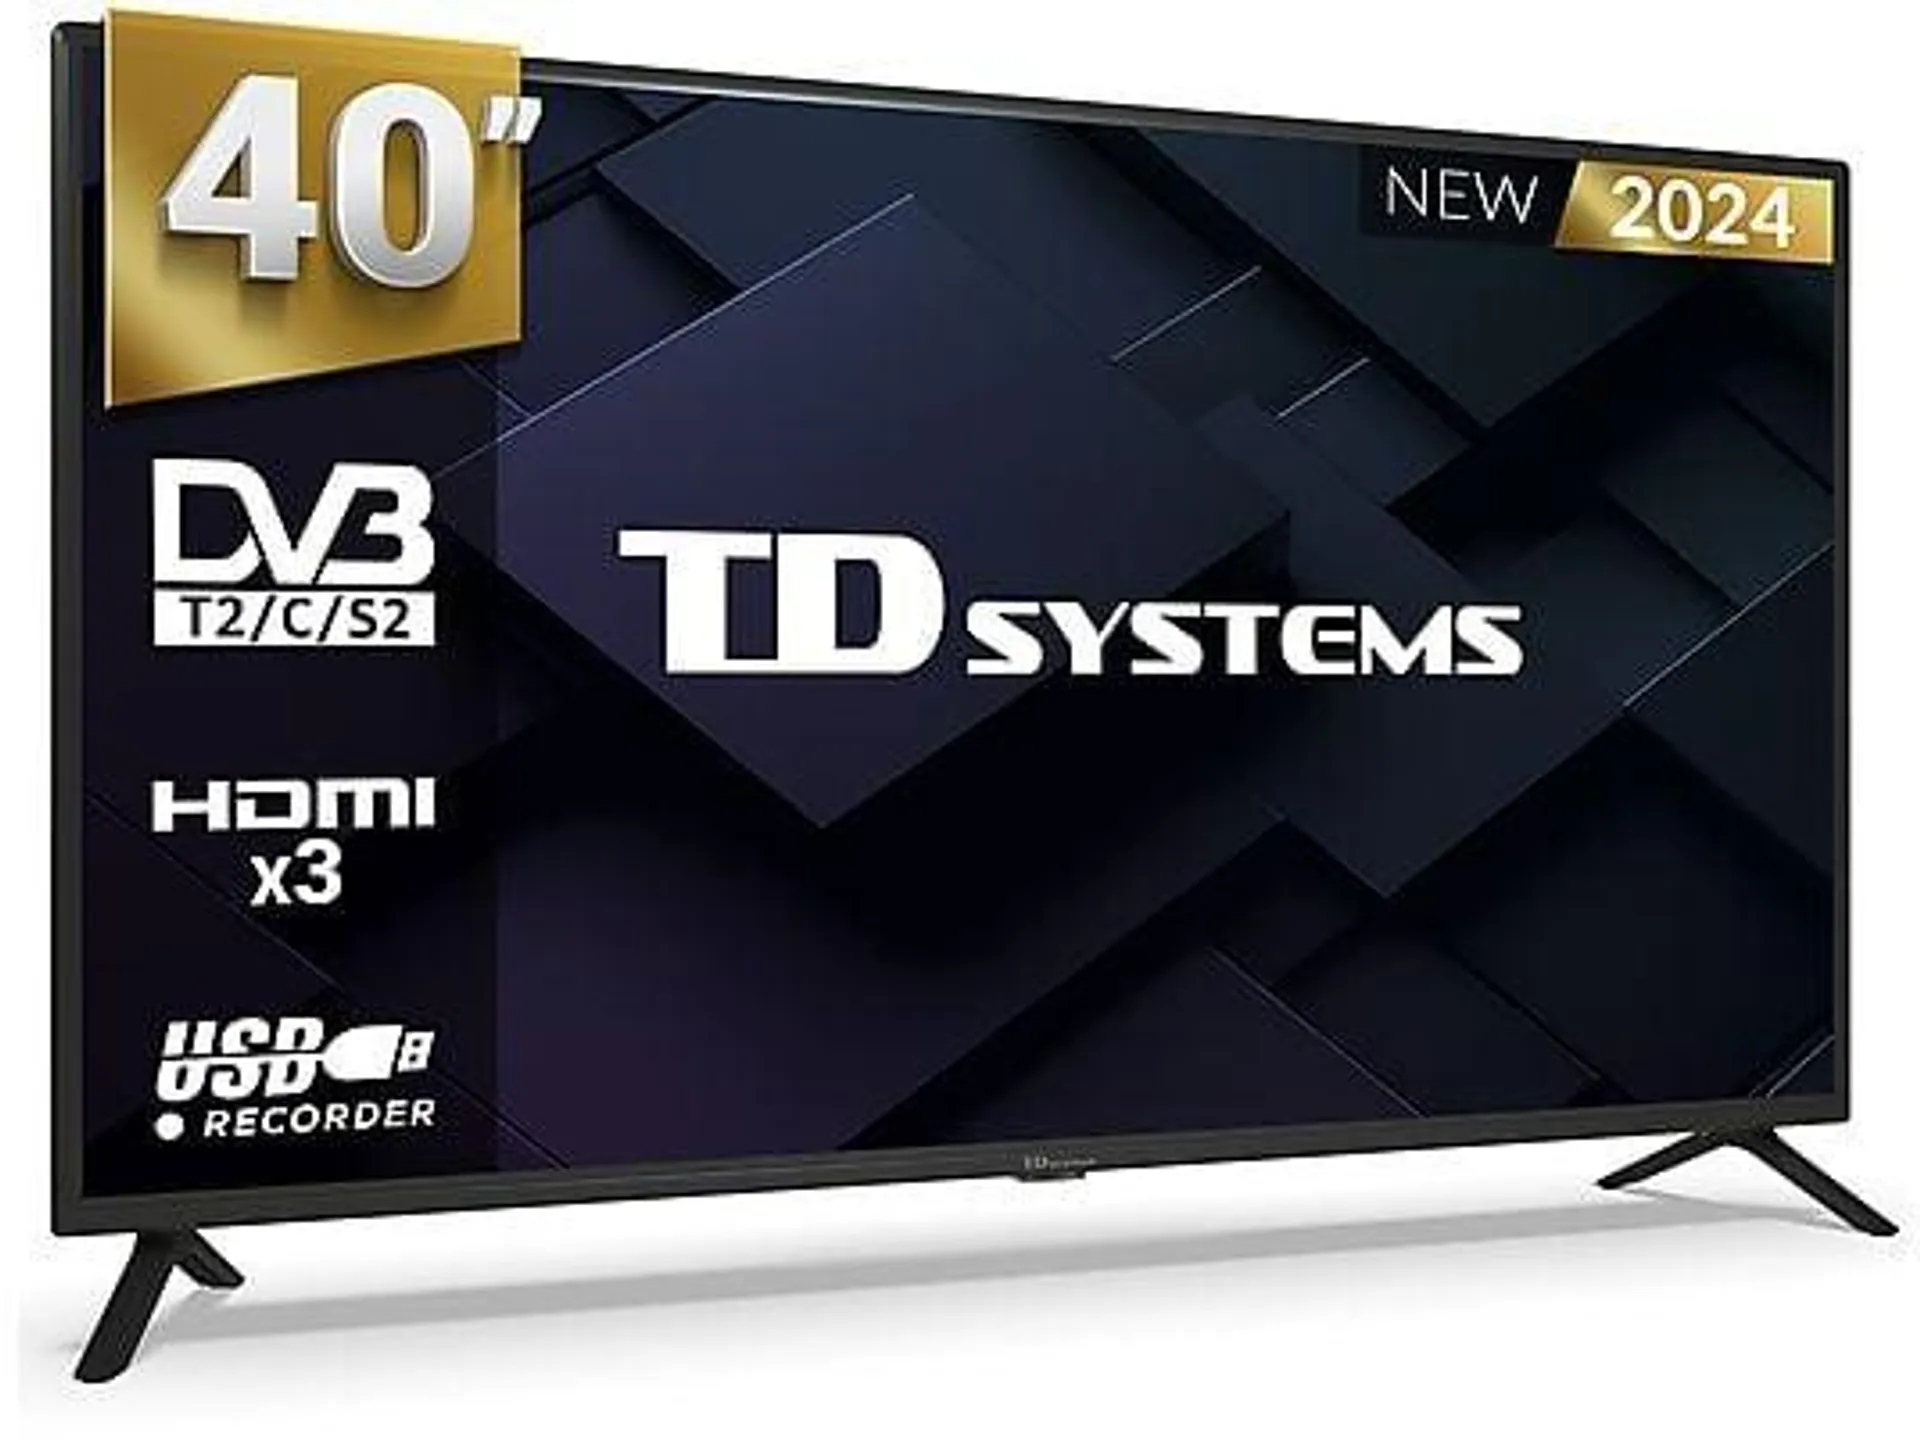 TV DLED 40" - TD SYSTEMS PRIME40C19F, Full-HD, DVB-T2 (H.265), Negro